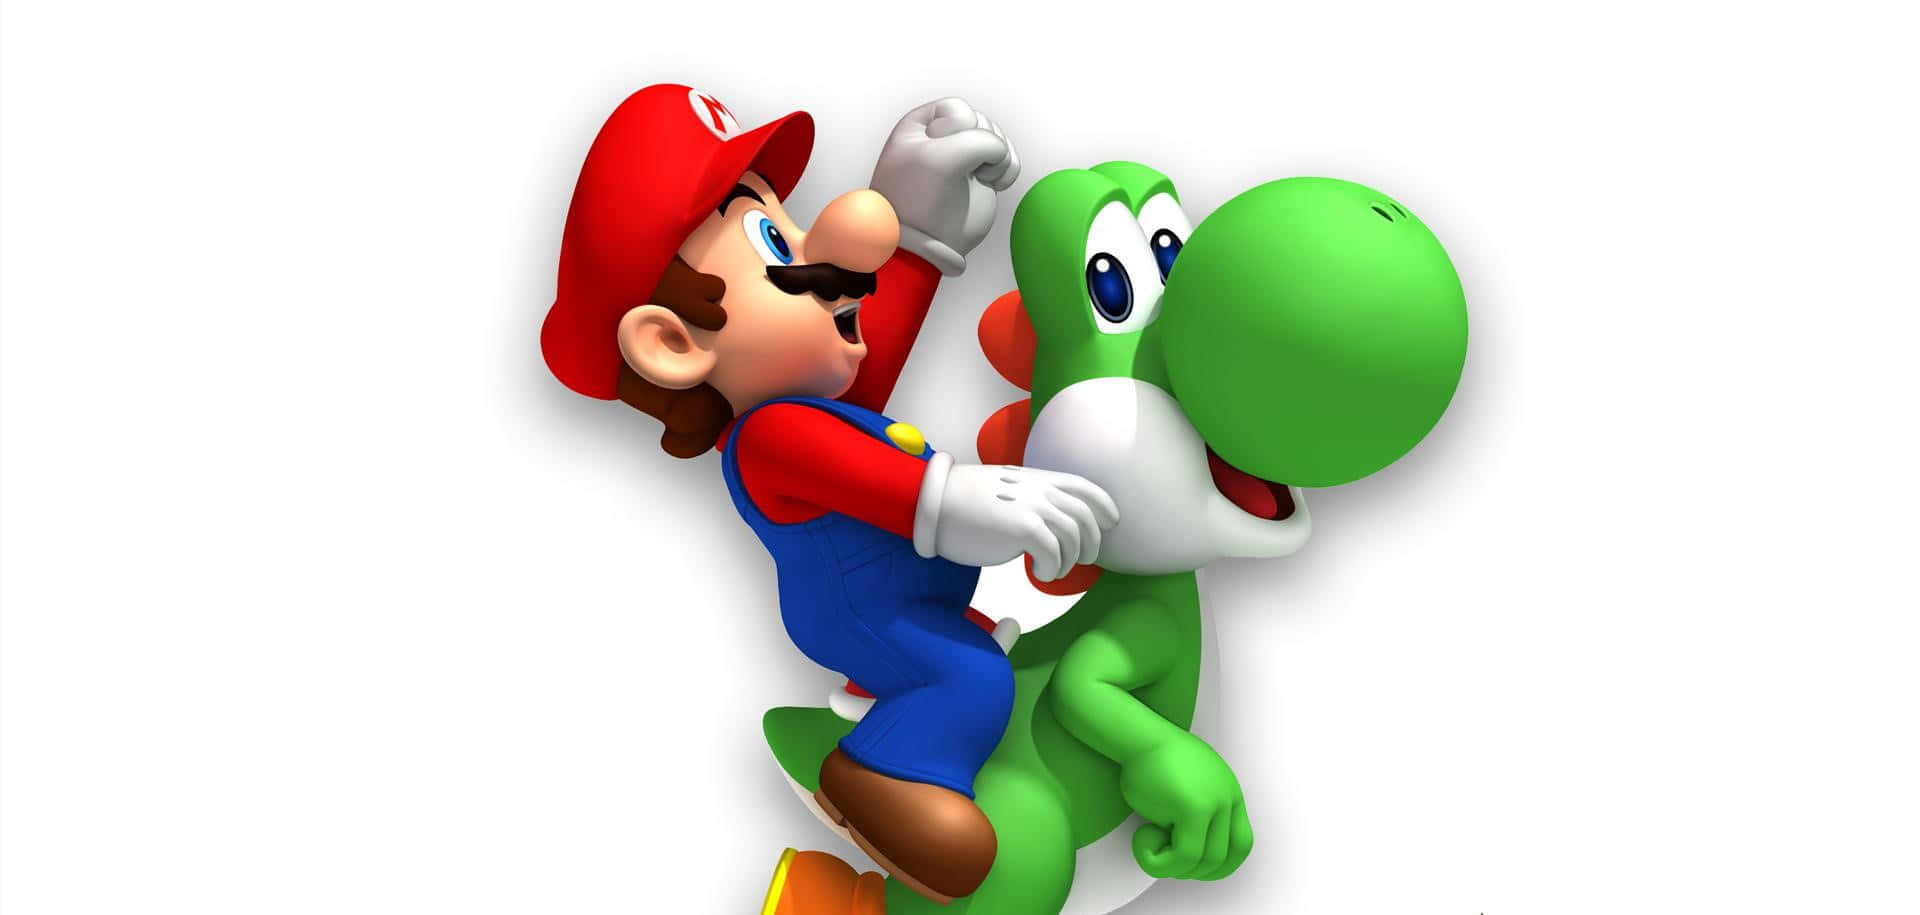 Download Let'sa Go! Mario and Luigi Ready for Adventure | Wallpapers.com